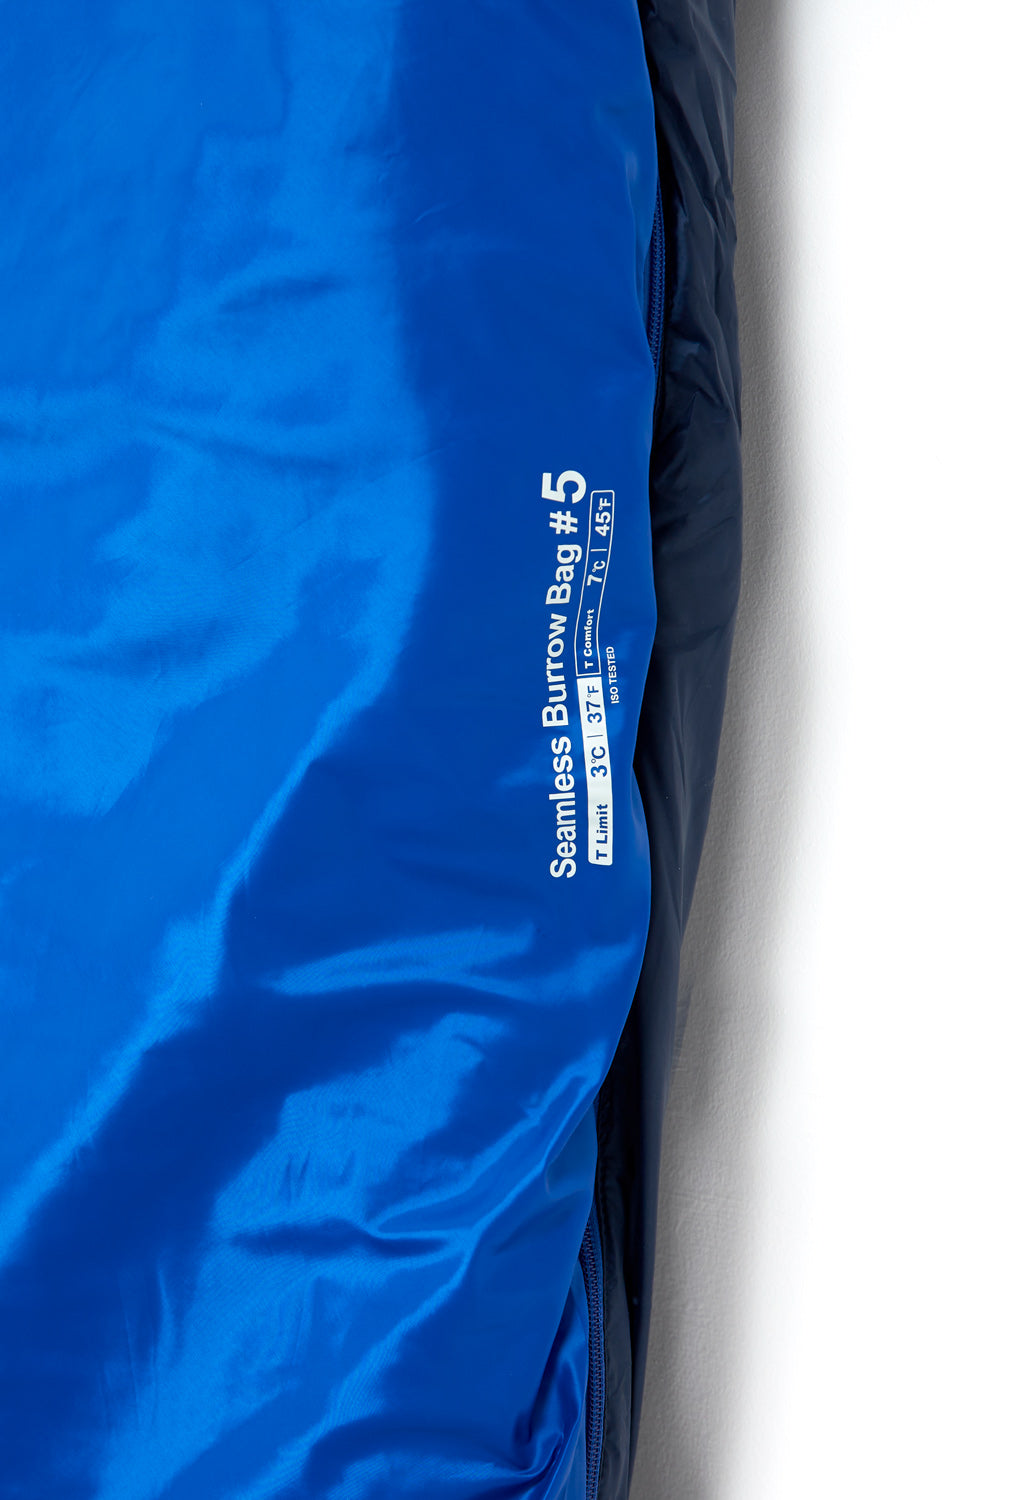 Montbell Seamless Burrow Bag #5 Sleeping Bag - Blue Ridge